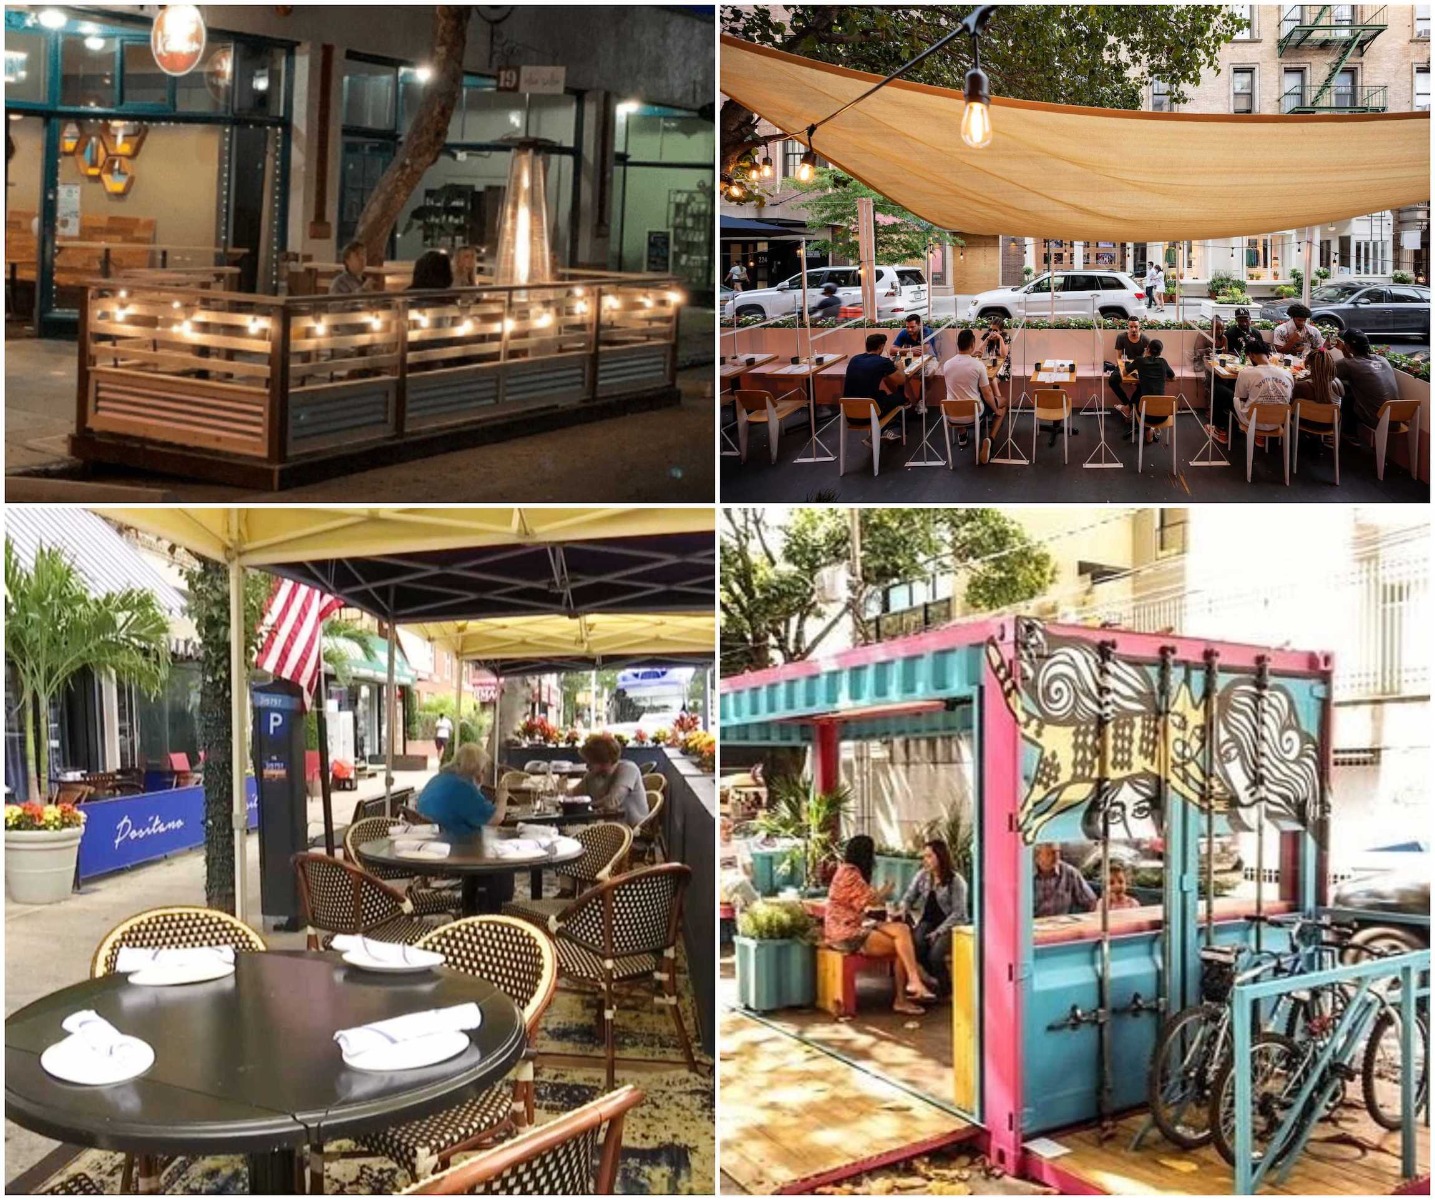 Creative-restaurant-street-seating-parklets-inspiration